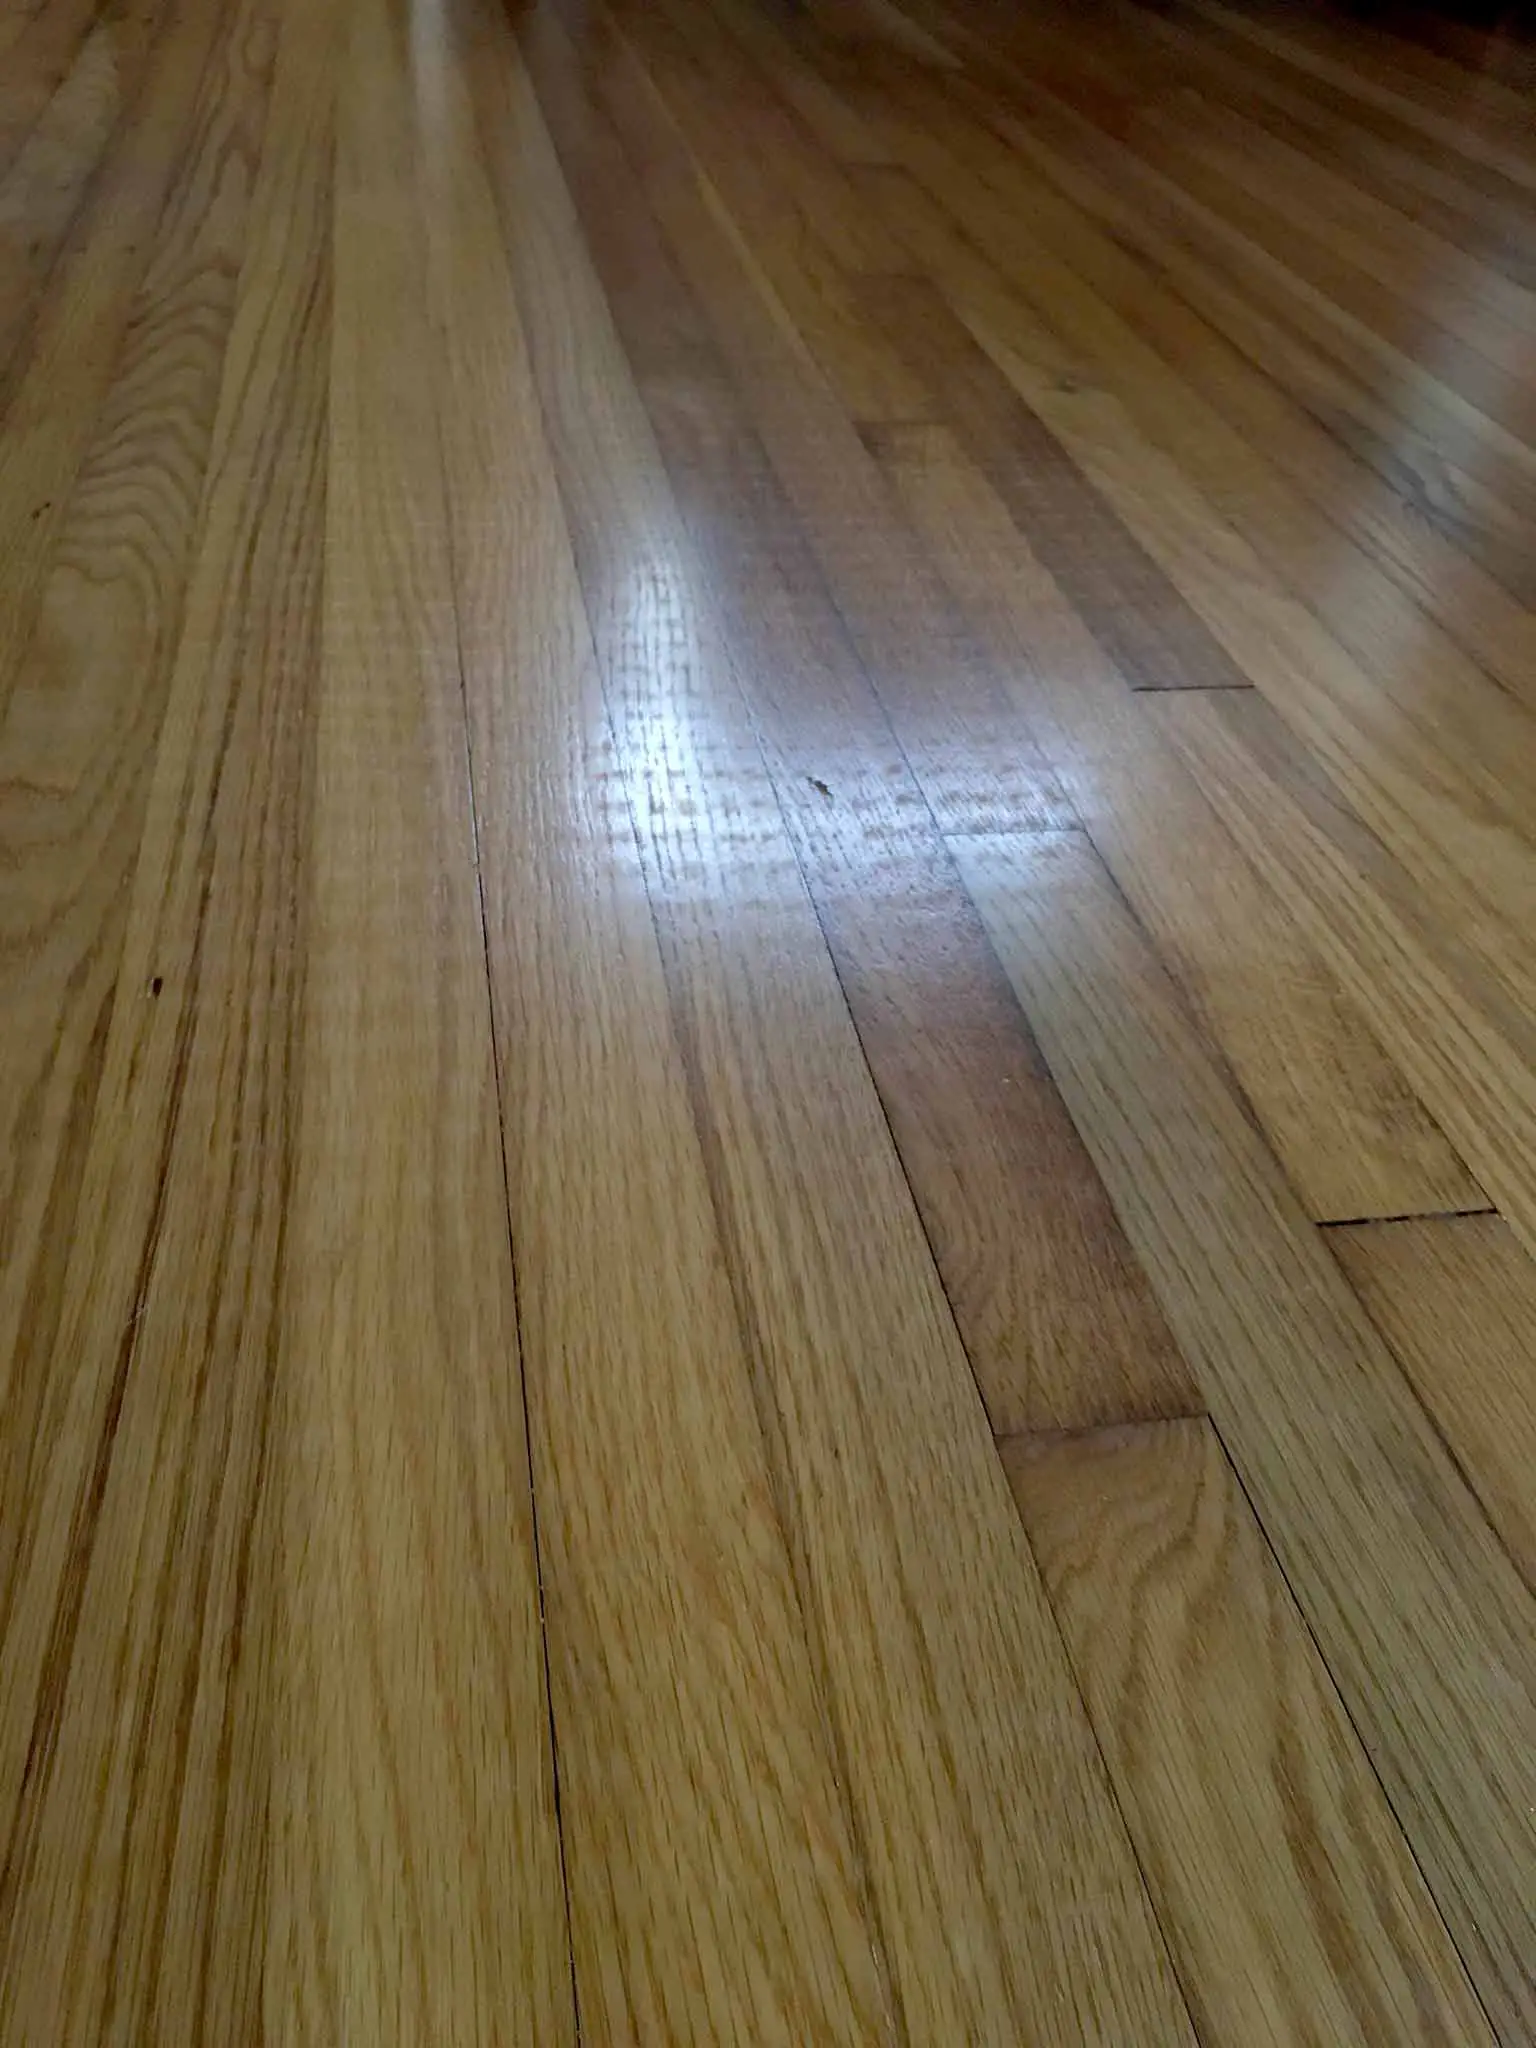 Damage to hardwood floors caused by jute rug - That Homebird Life Blog